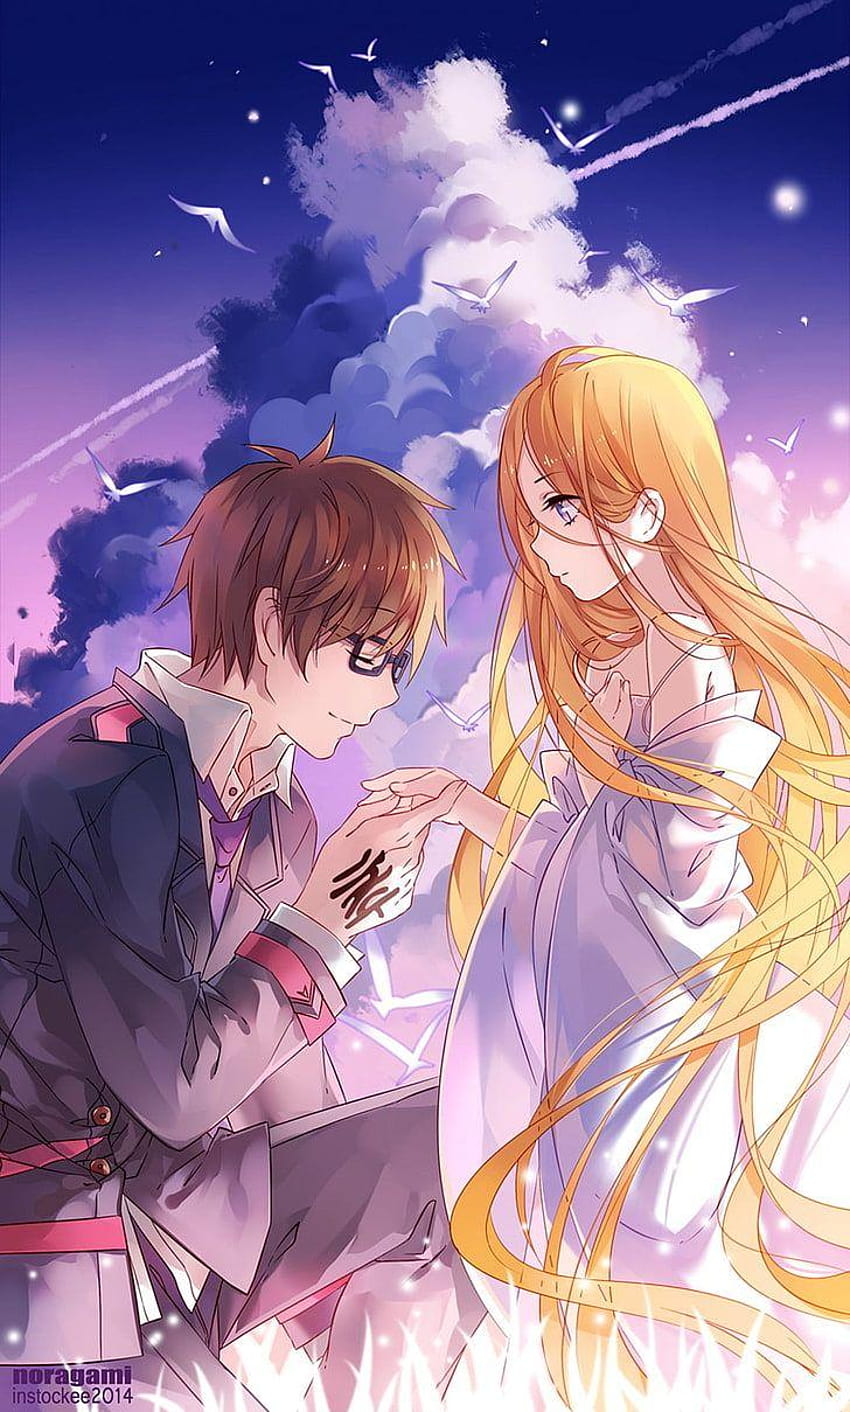 Kazuma and Megumin  Anime reviews, Anime, Cute anime couples